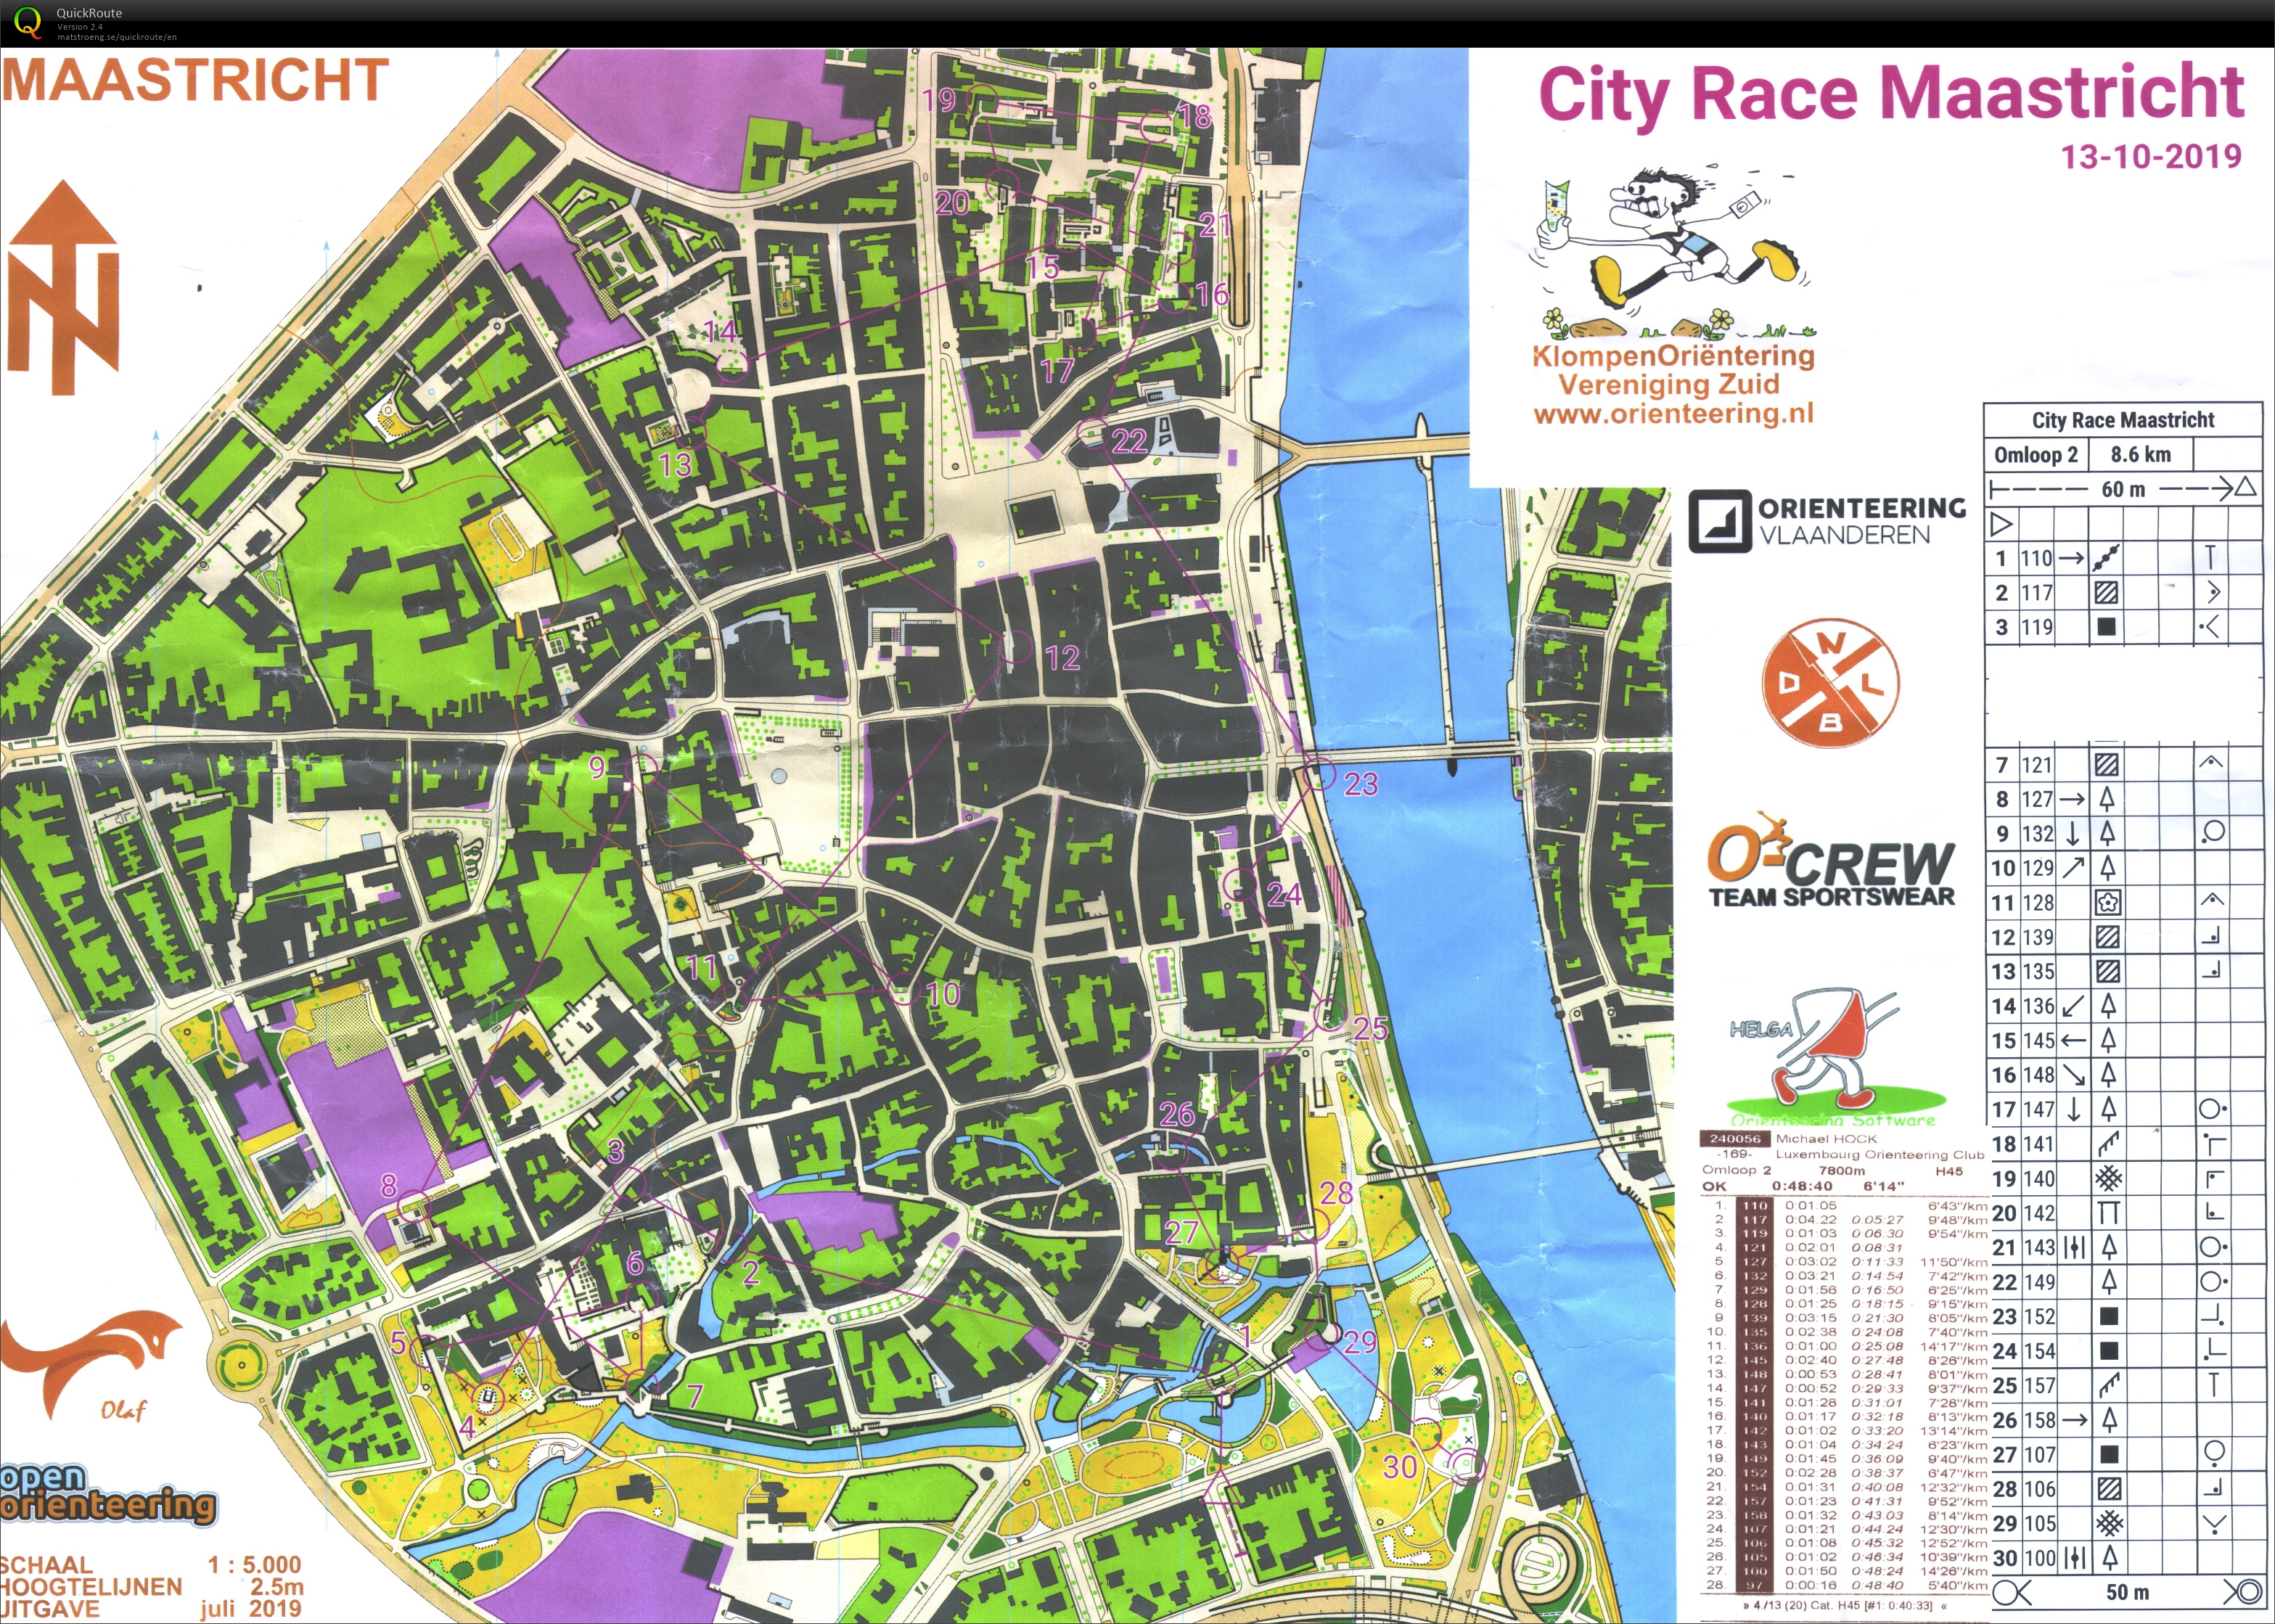 City race (13-10-2019)